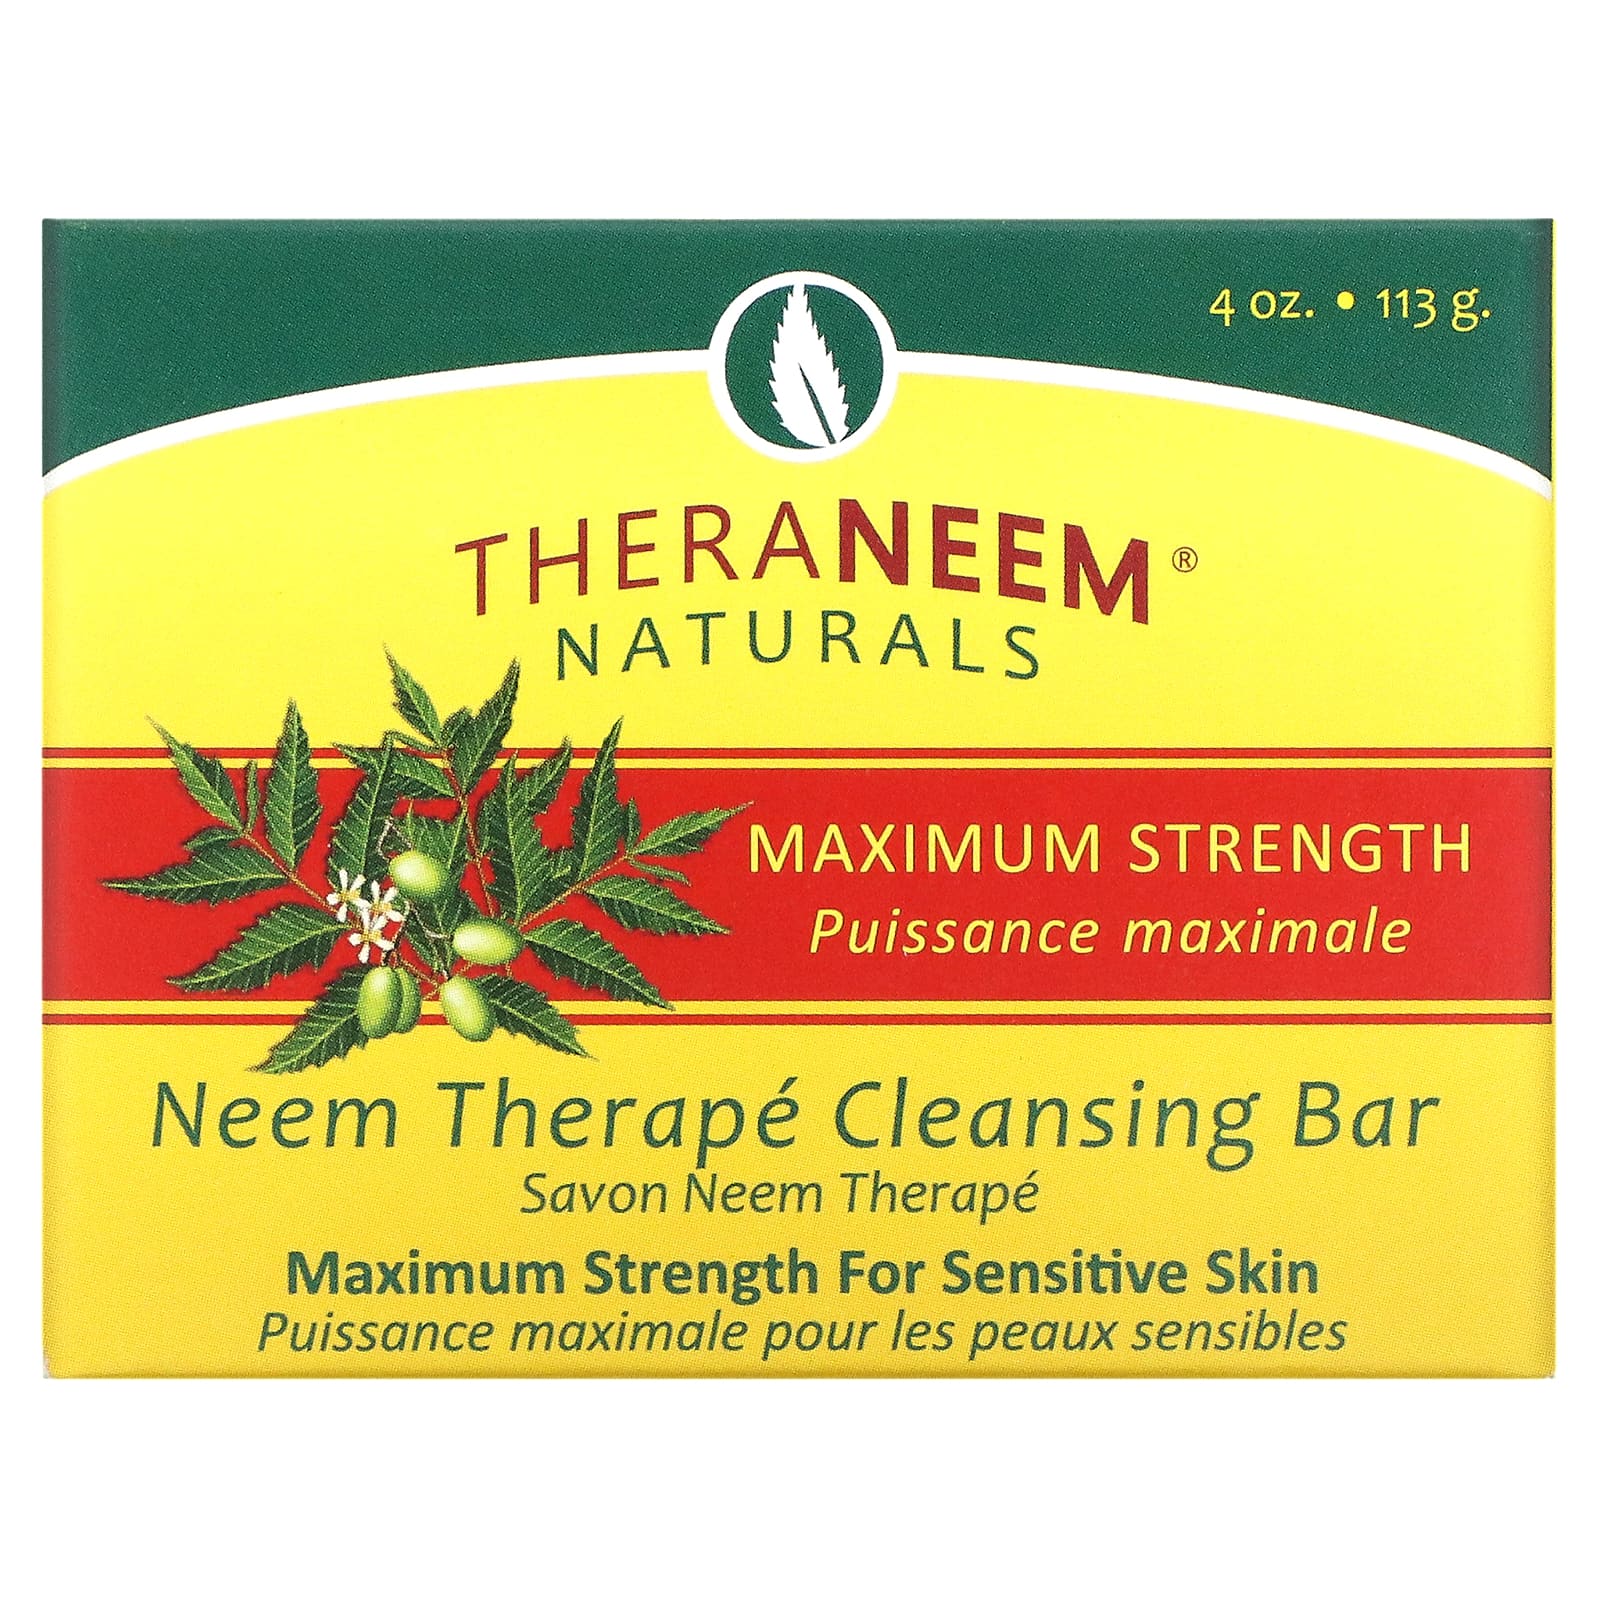 Organix South TheraNeem Organix Neem Therapy Cleansing Bar Maximum Strength 4 oz (113 g)